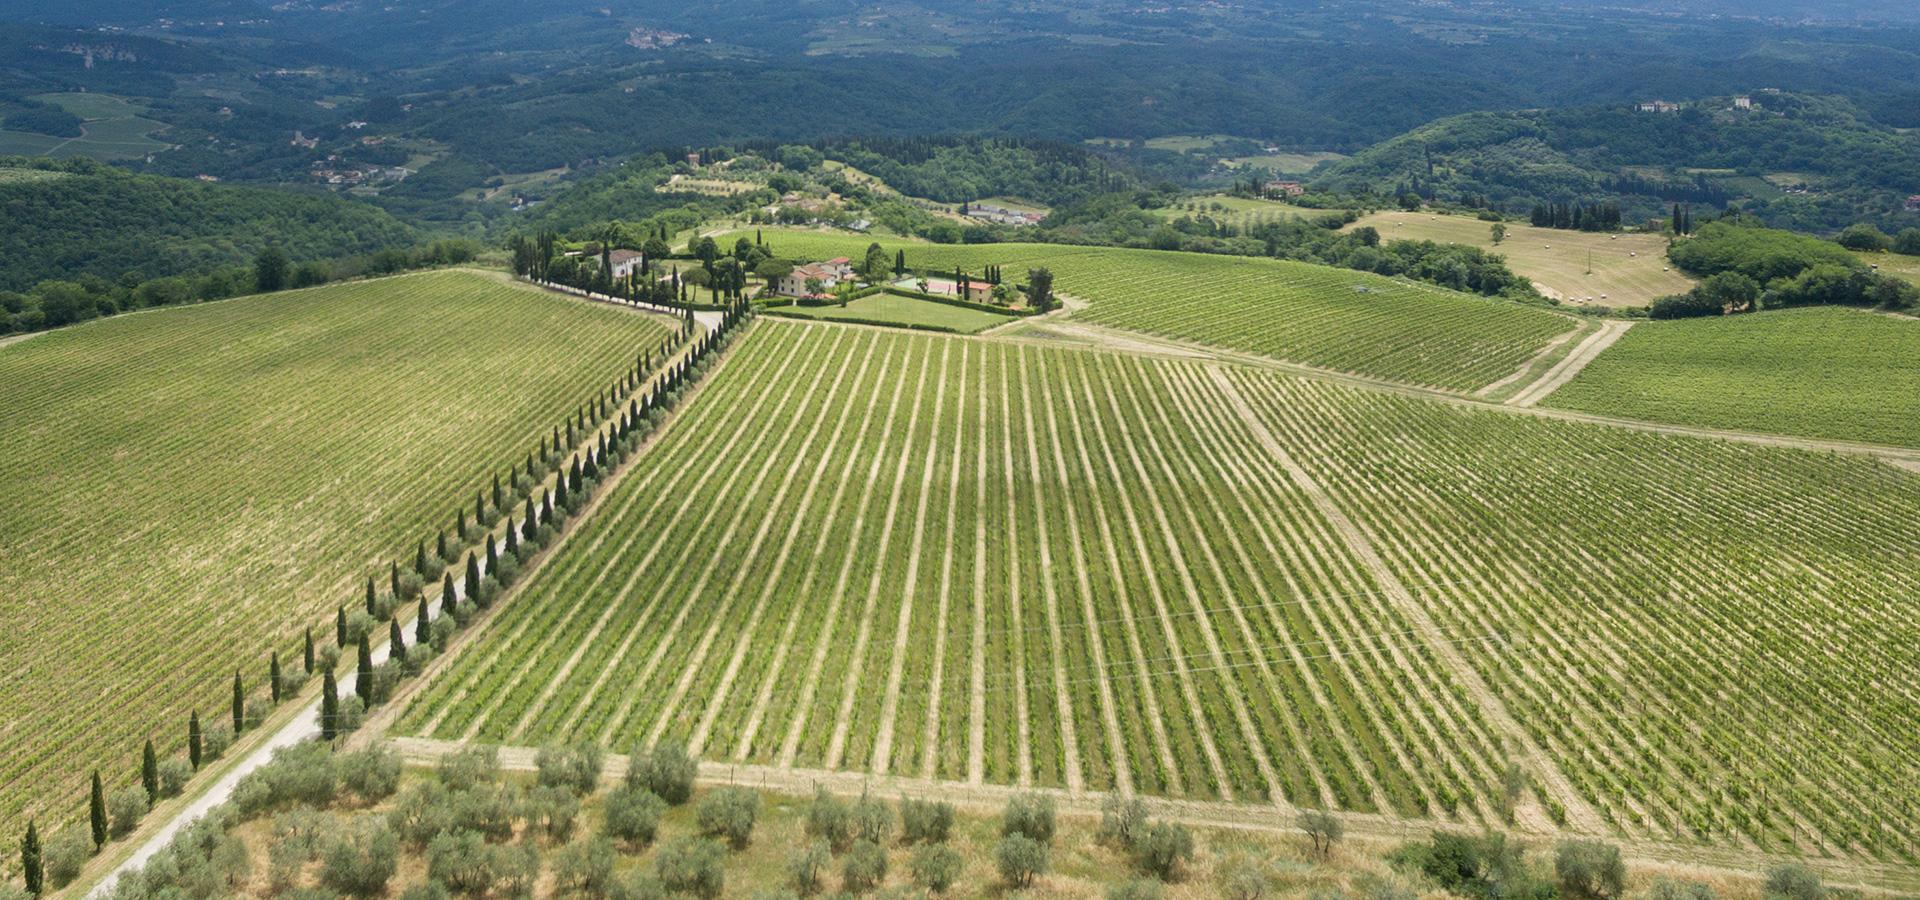 Vendita Vino Chianti | Fattoria Pagnana vendita diretta di vino a Firenze, Toscana